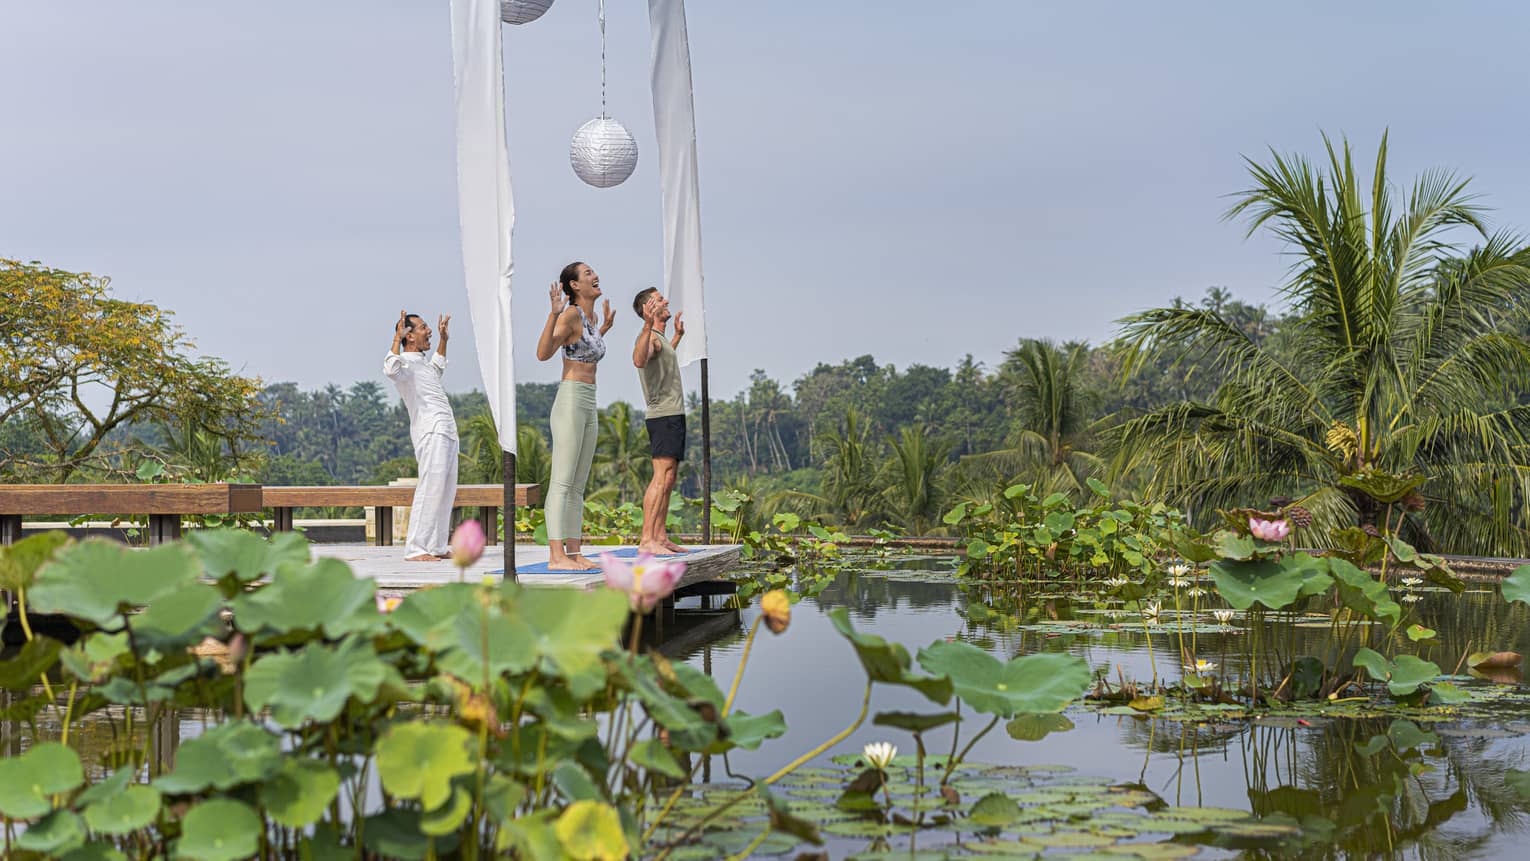 Lotus Pond Laughter Yoga